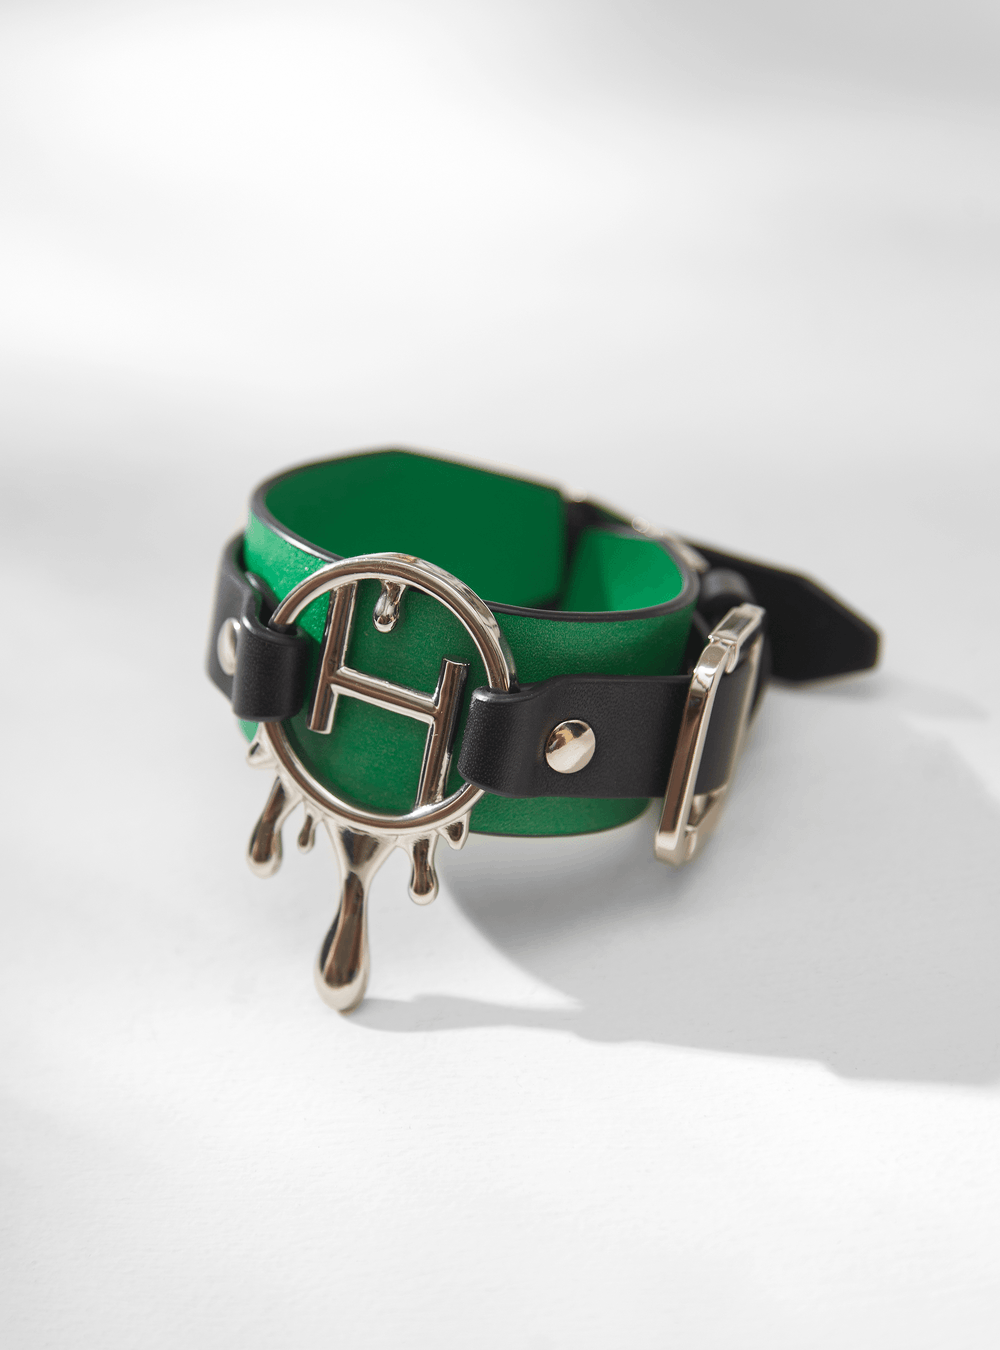 Swarovski Cross Signature Bracelet, Leather, Black, Rose-gold tone plated  5115156 - Morré Lyons Jewelers